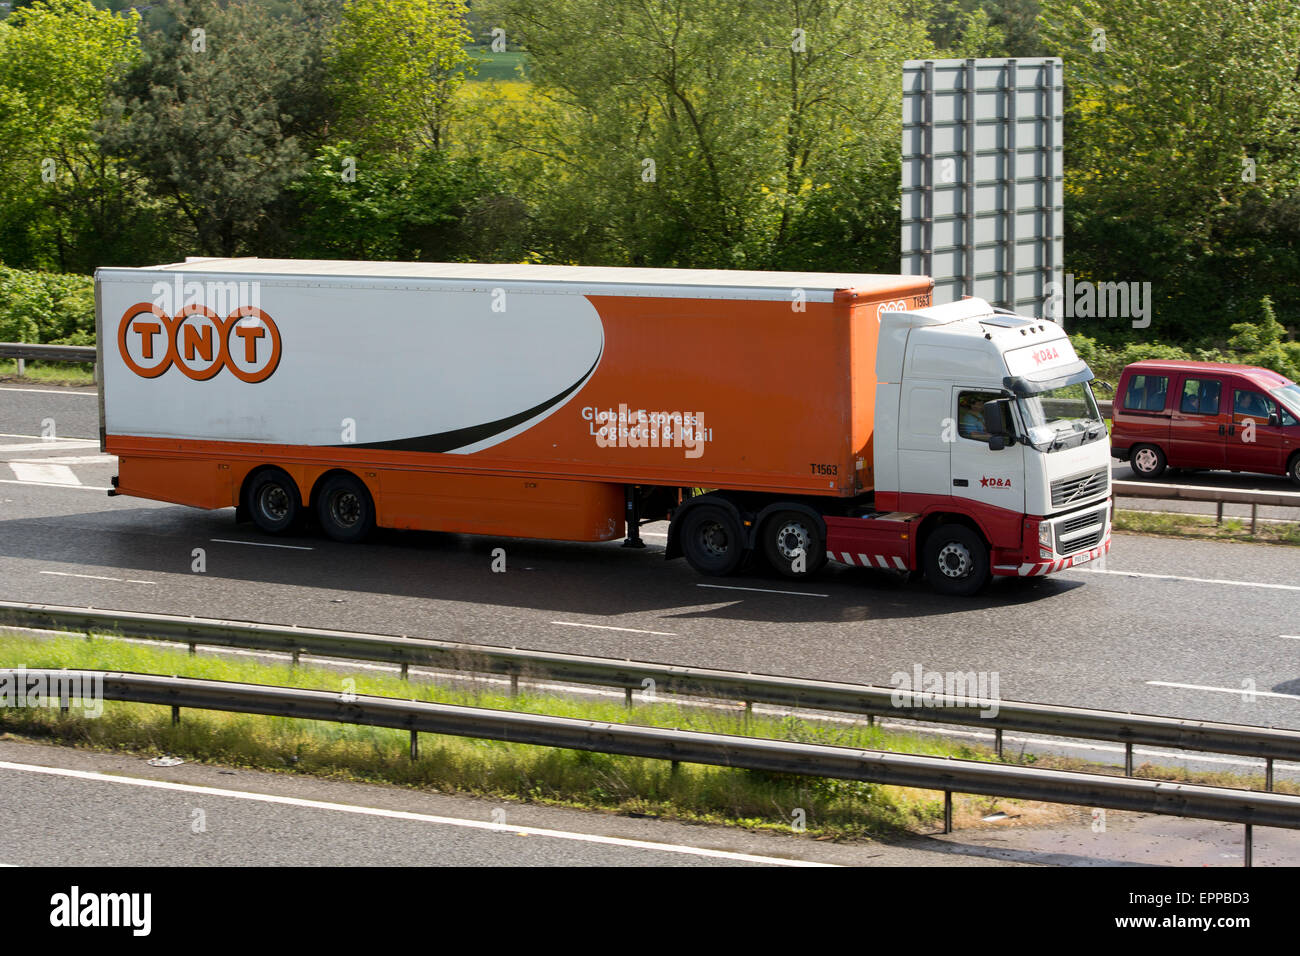 TNT lorry on M40 motorway, Warwickshire, UK Stock Photo